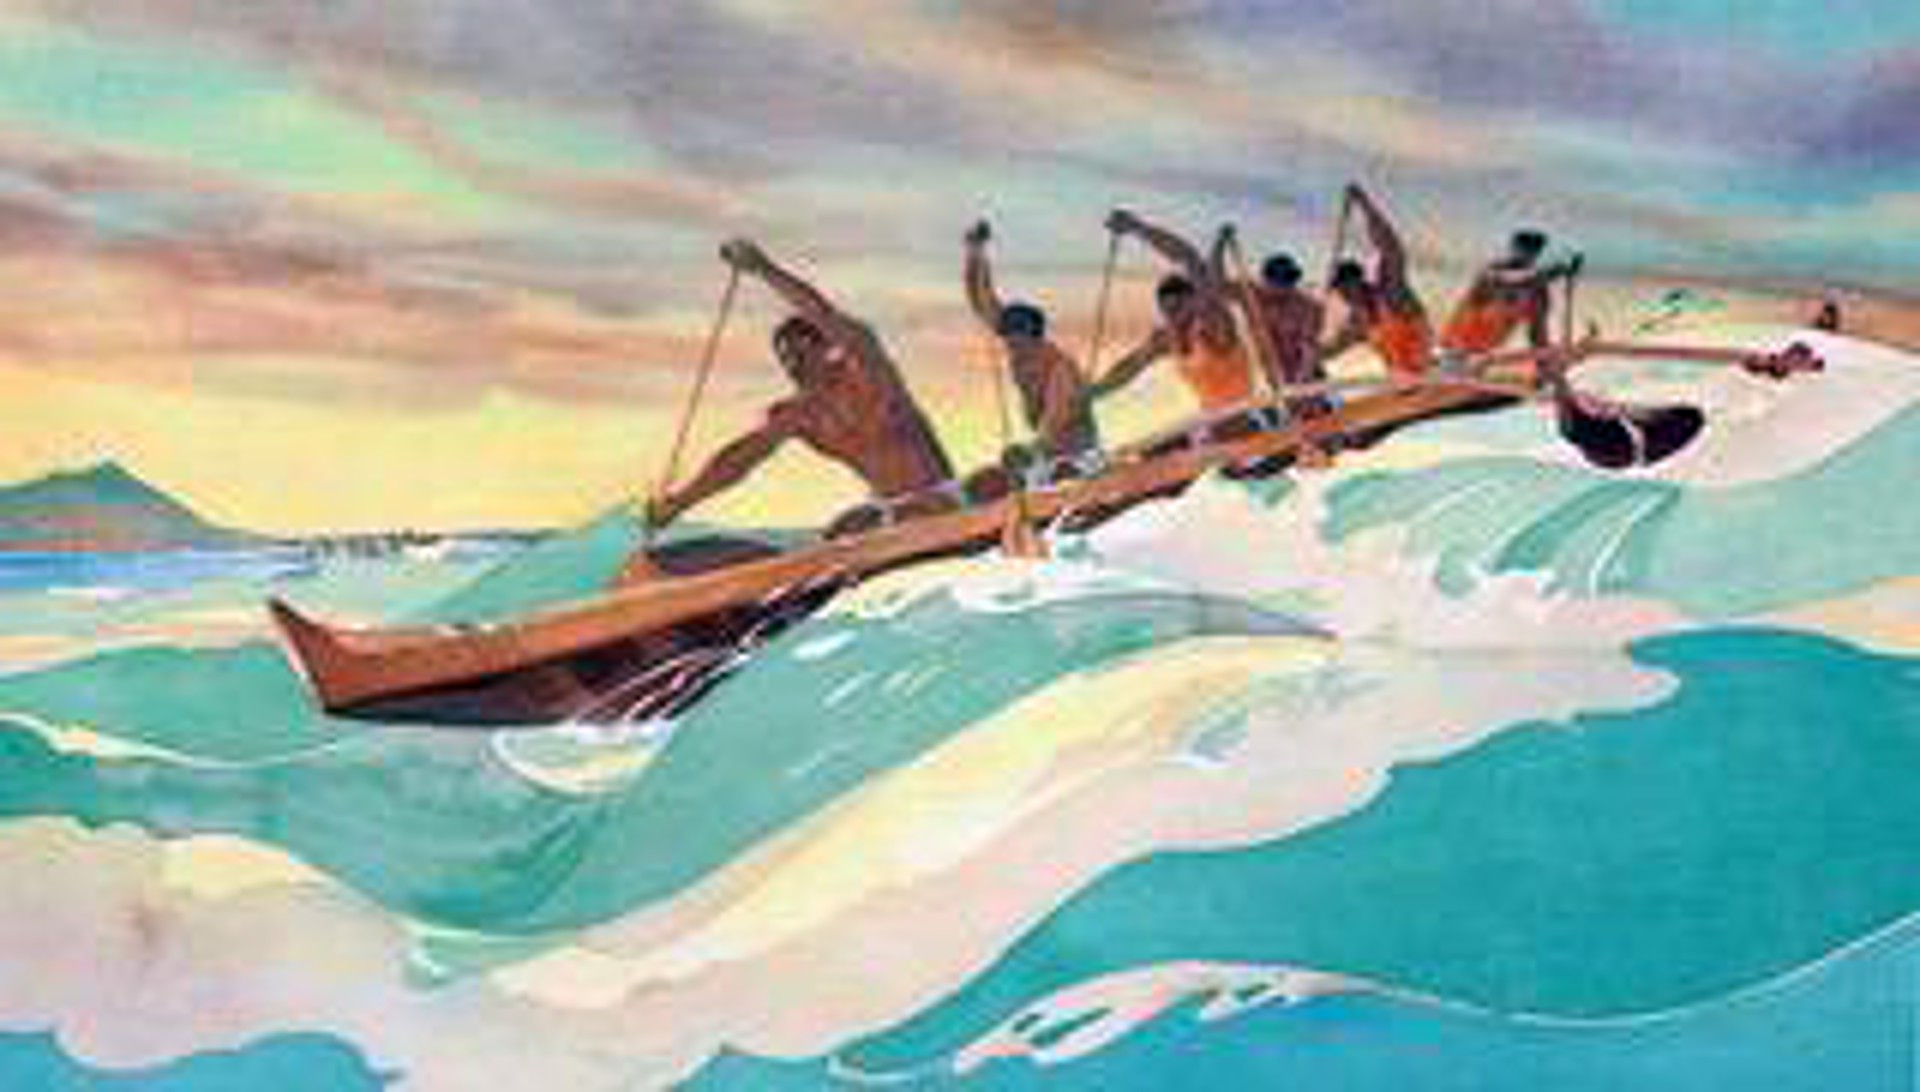 Canoe Racing by Susan McGovney Hansen